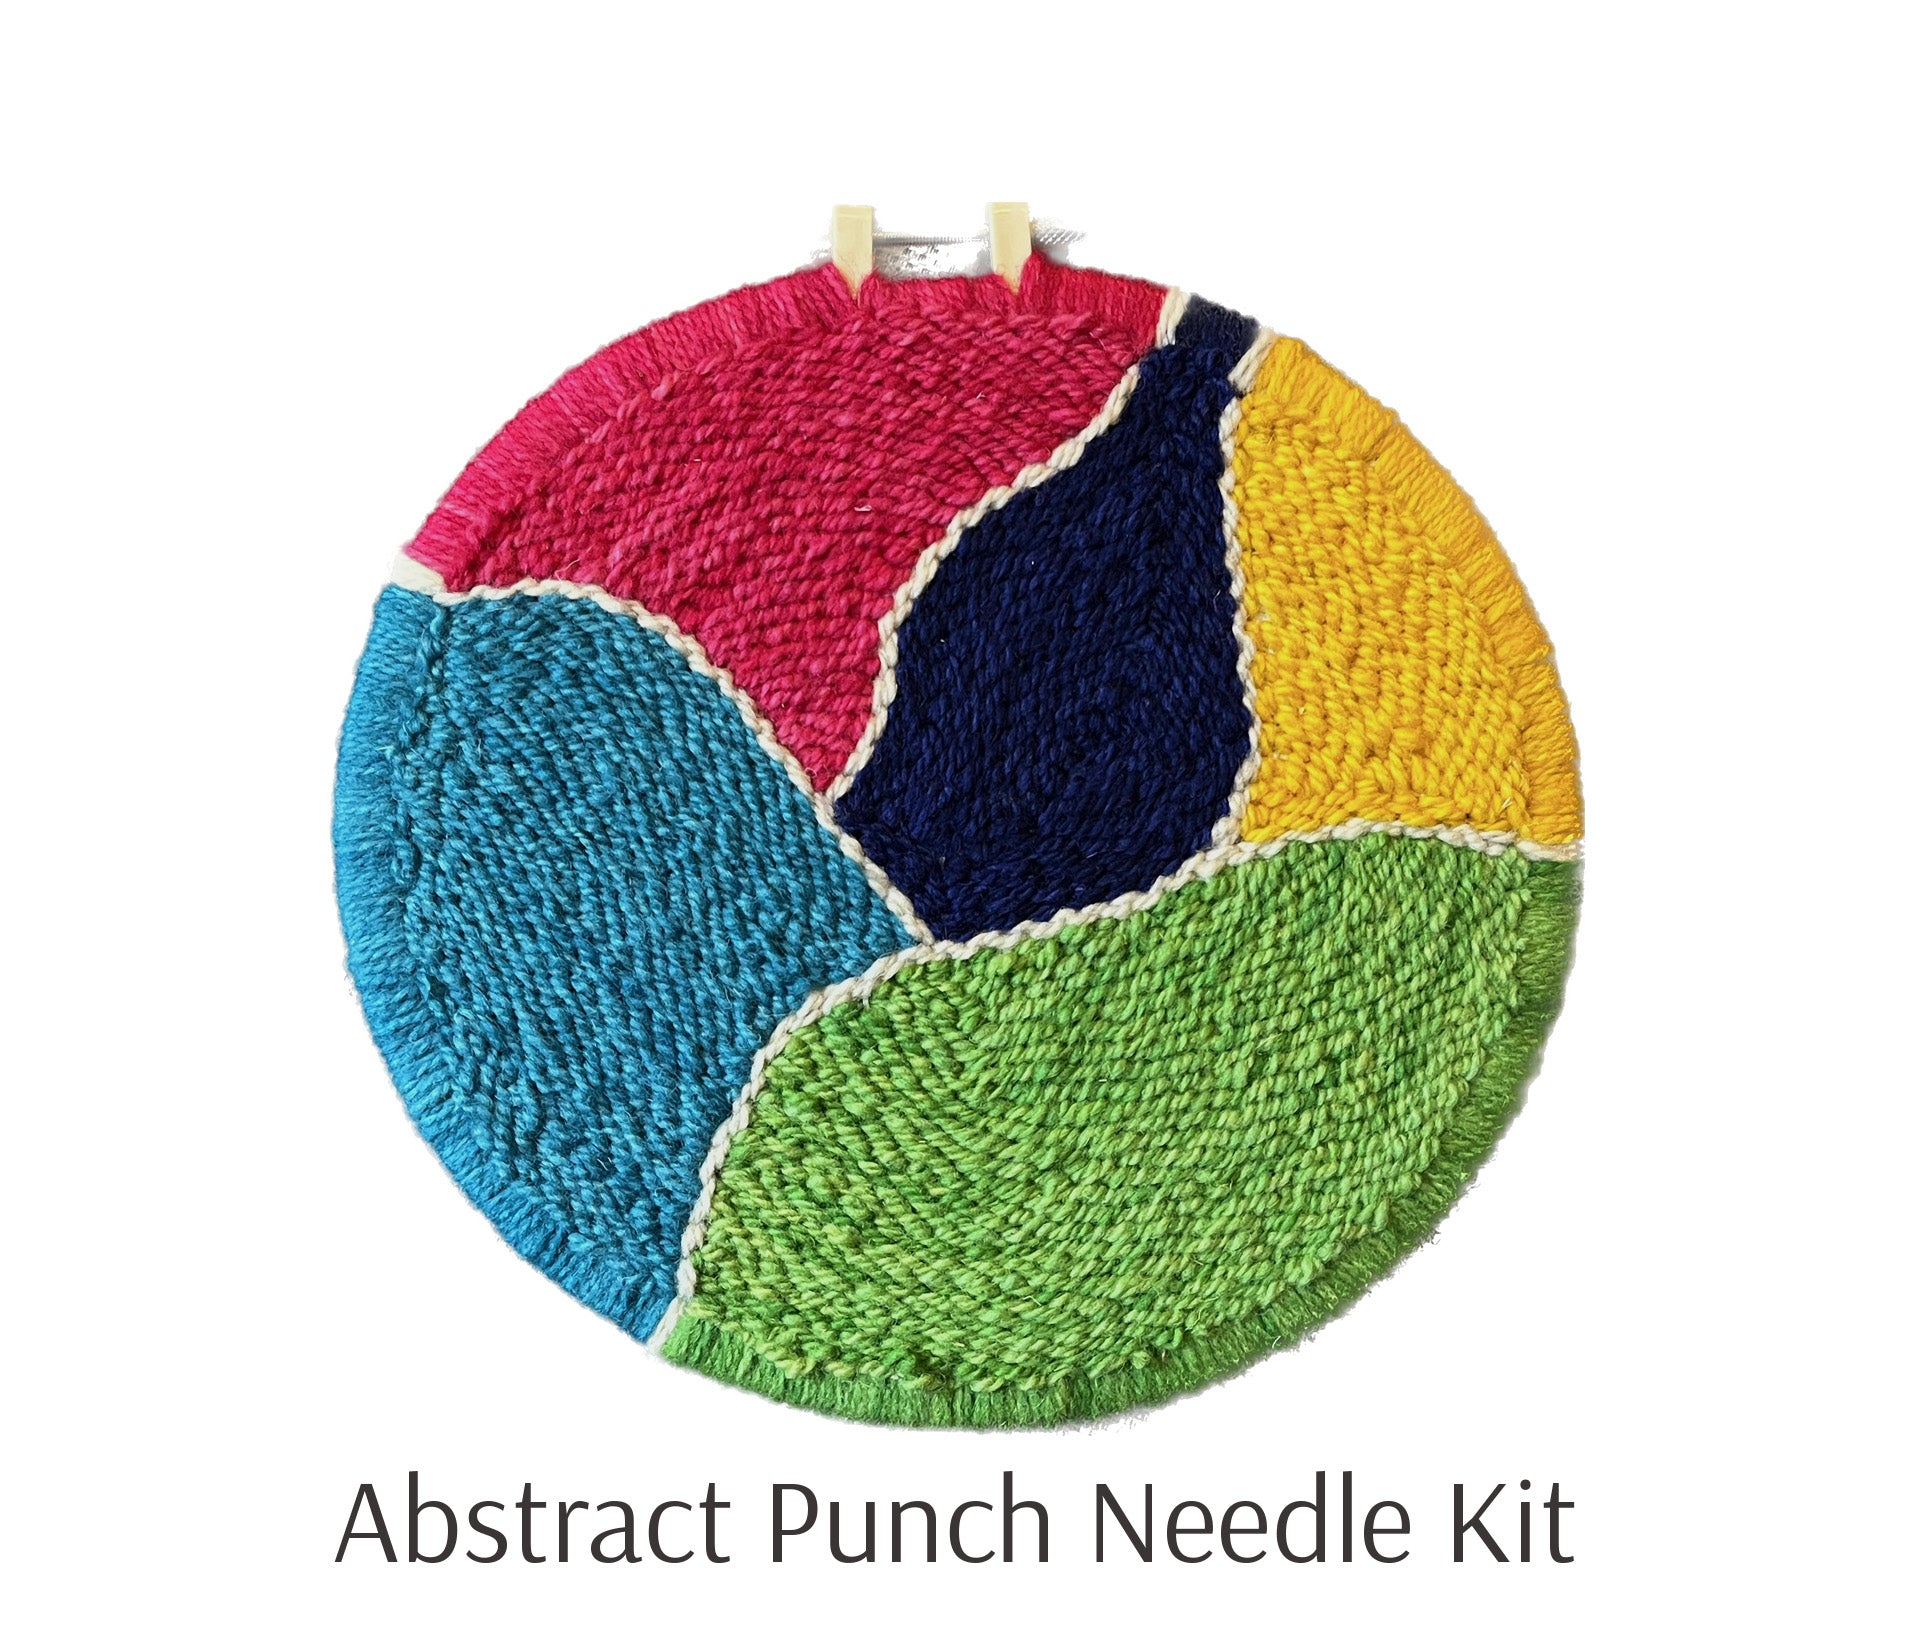 Ultra Punch Needle Three Needle Set~ – Vermont Harvest Folk Art by